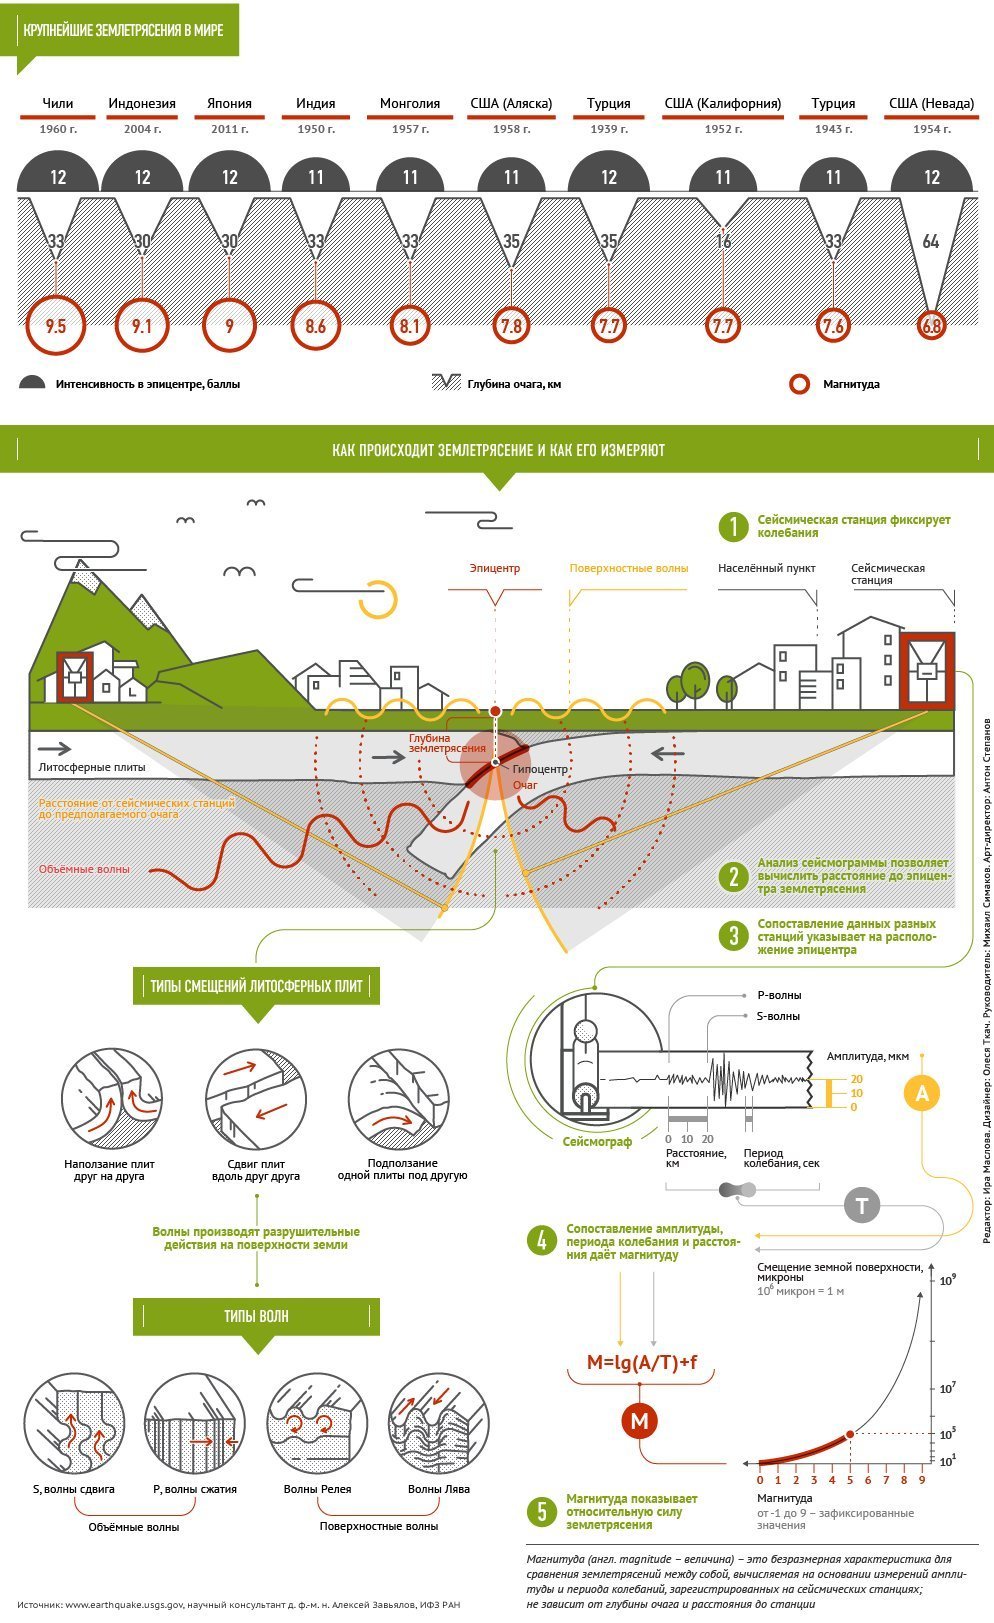 Условия землетрясений. Землетрясение инфографика. Как пройсходит землетрясения. Инфографика почему случаются землетрясения. Землетрясение схема по баллам.